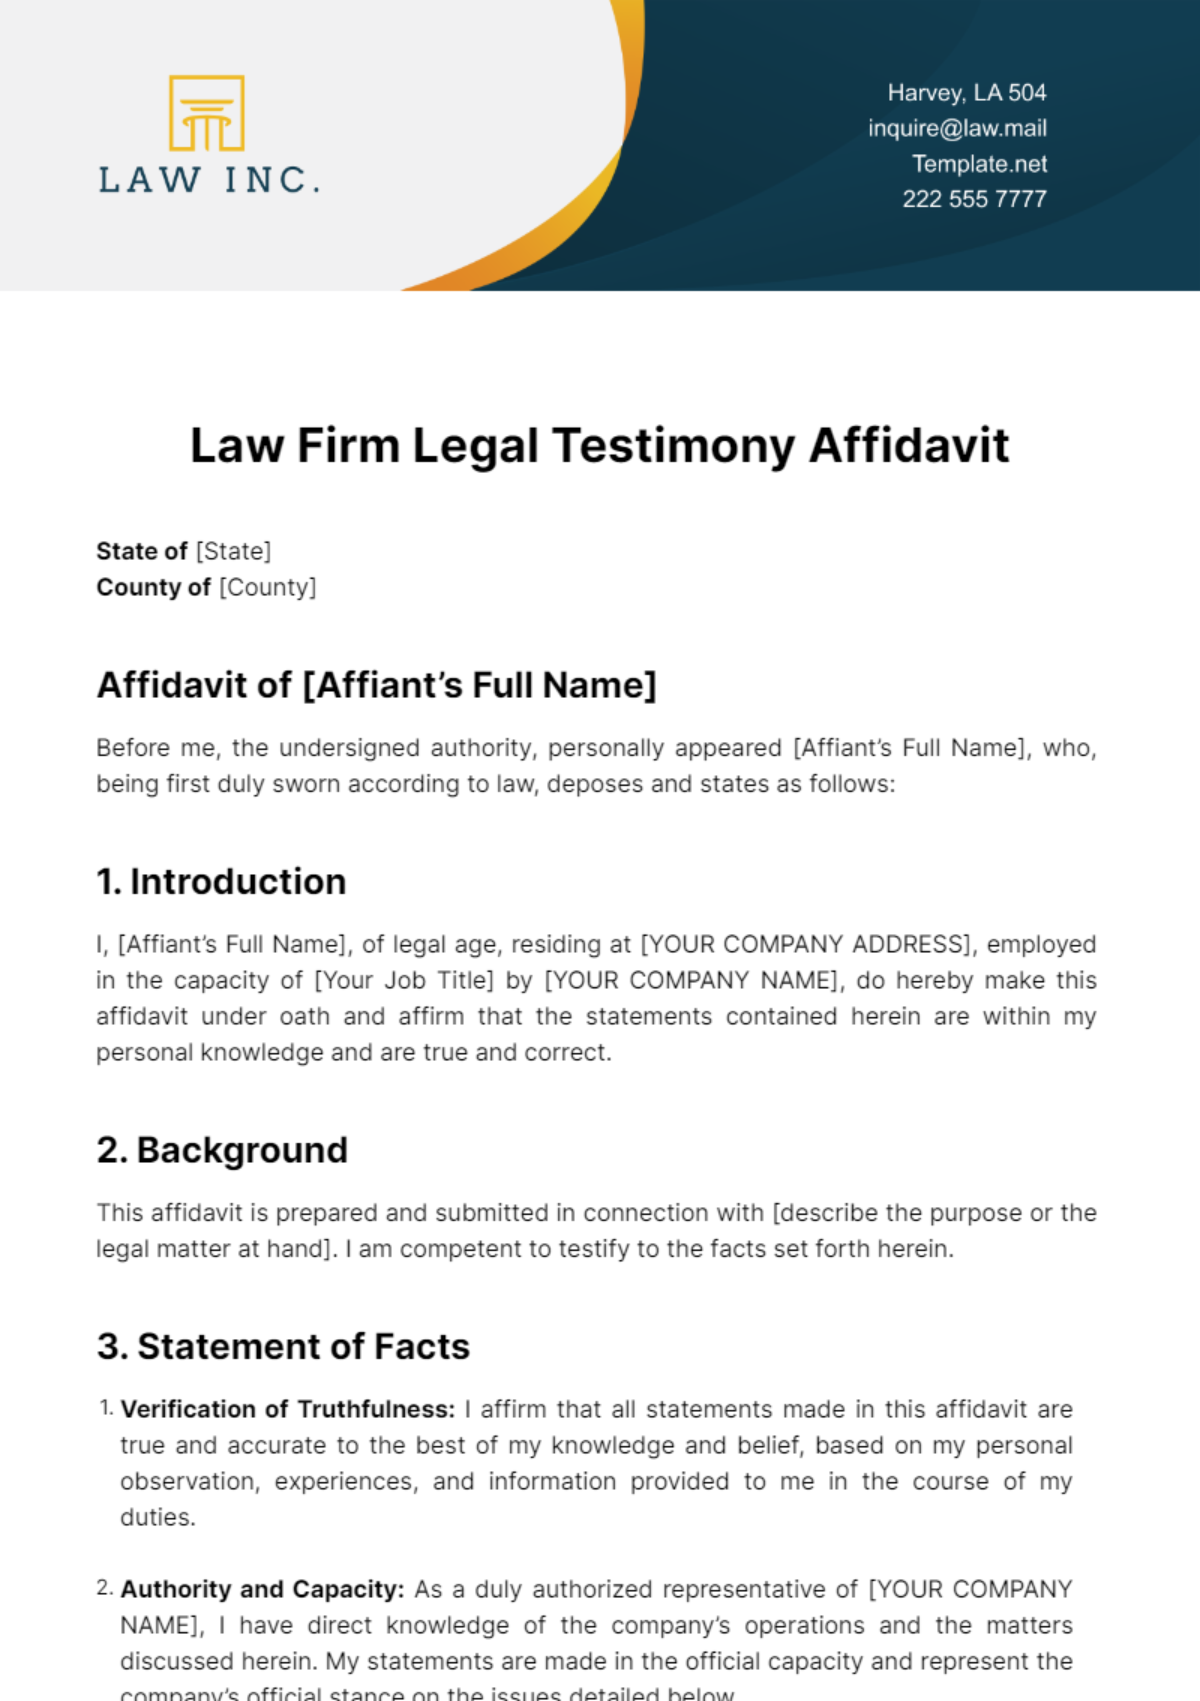 Free Law Firm Legal Testimony Affidavit Template